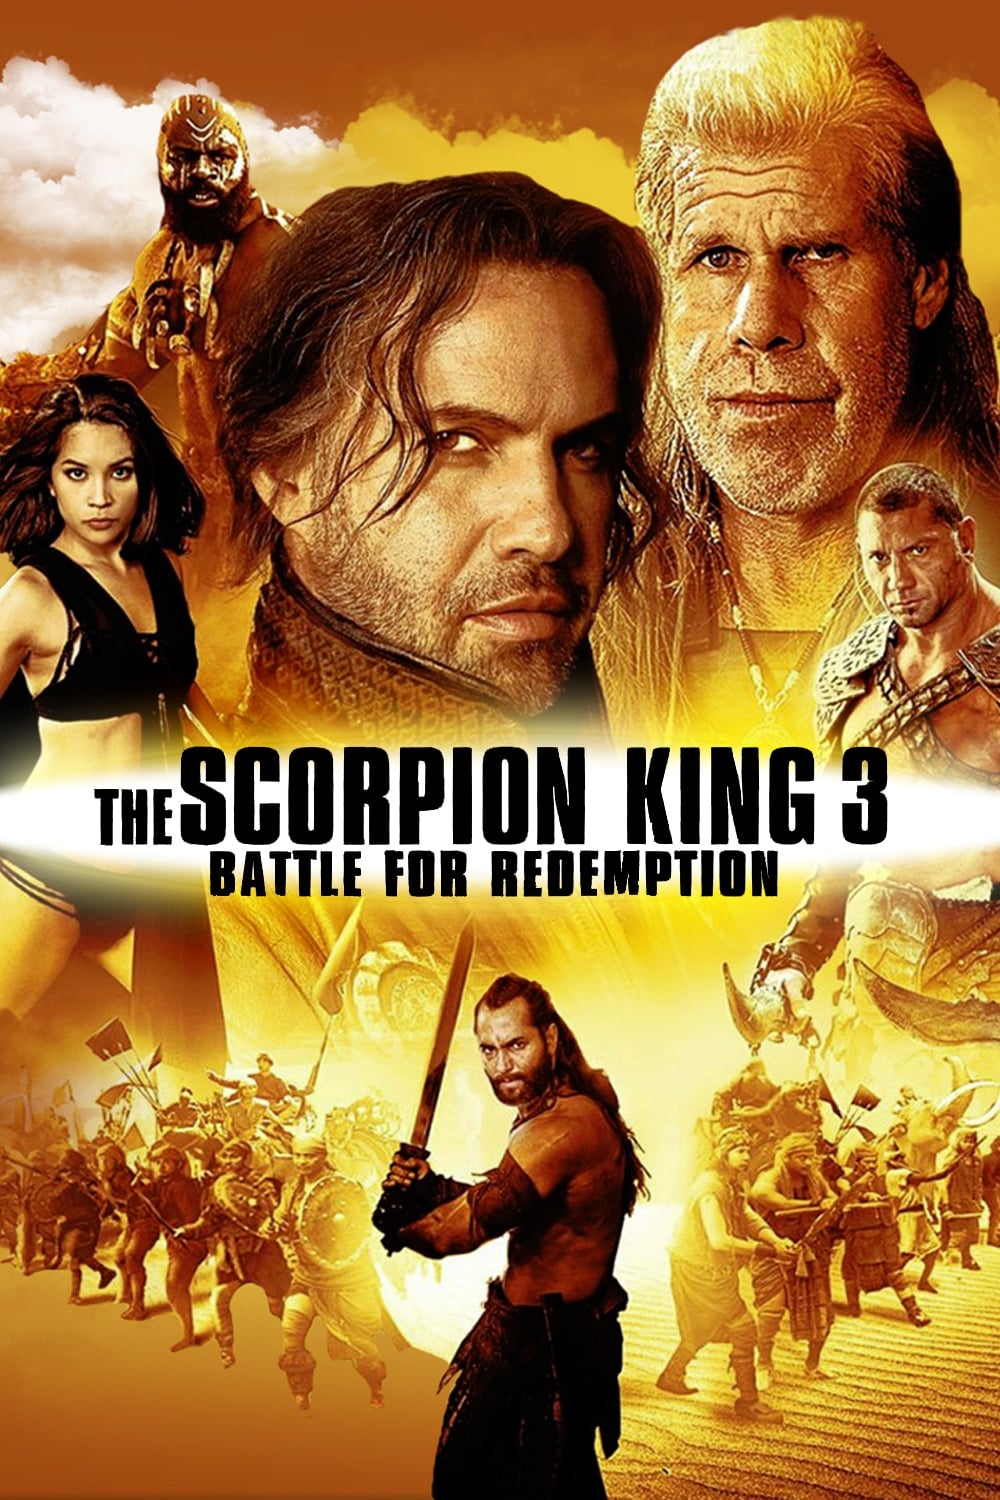 EN - The Scorpion King 3 Battle For Redemption (2012)